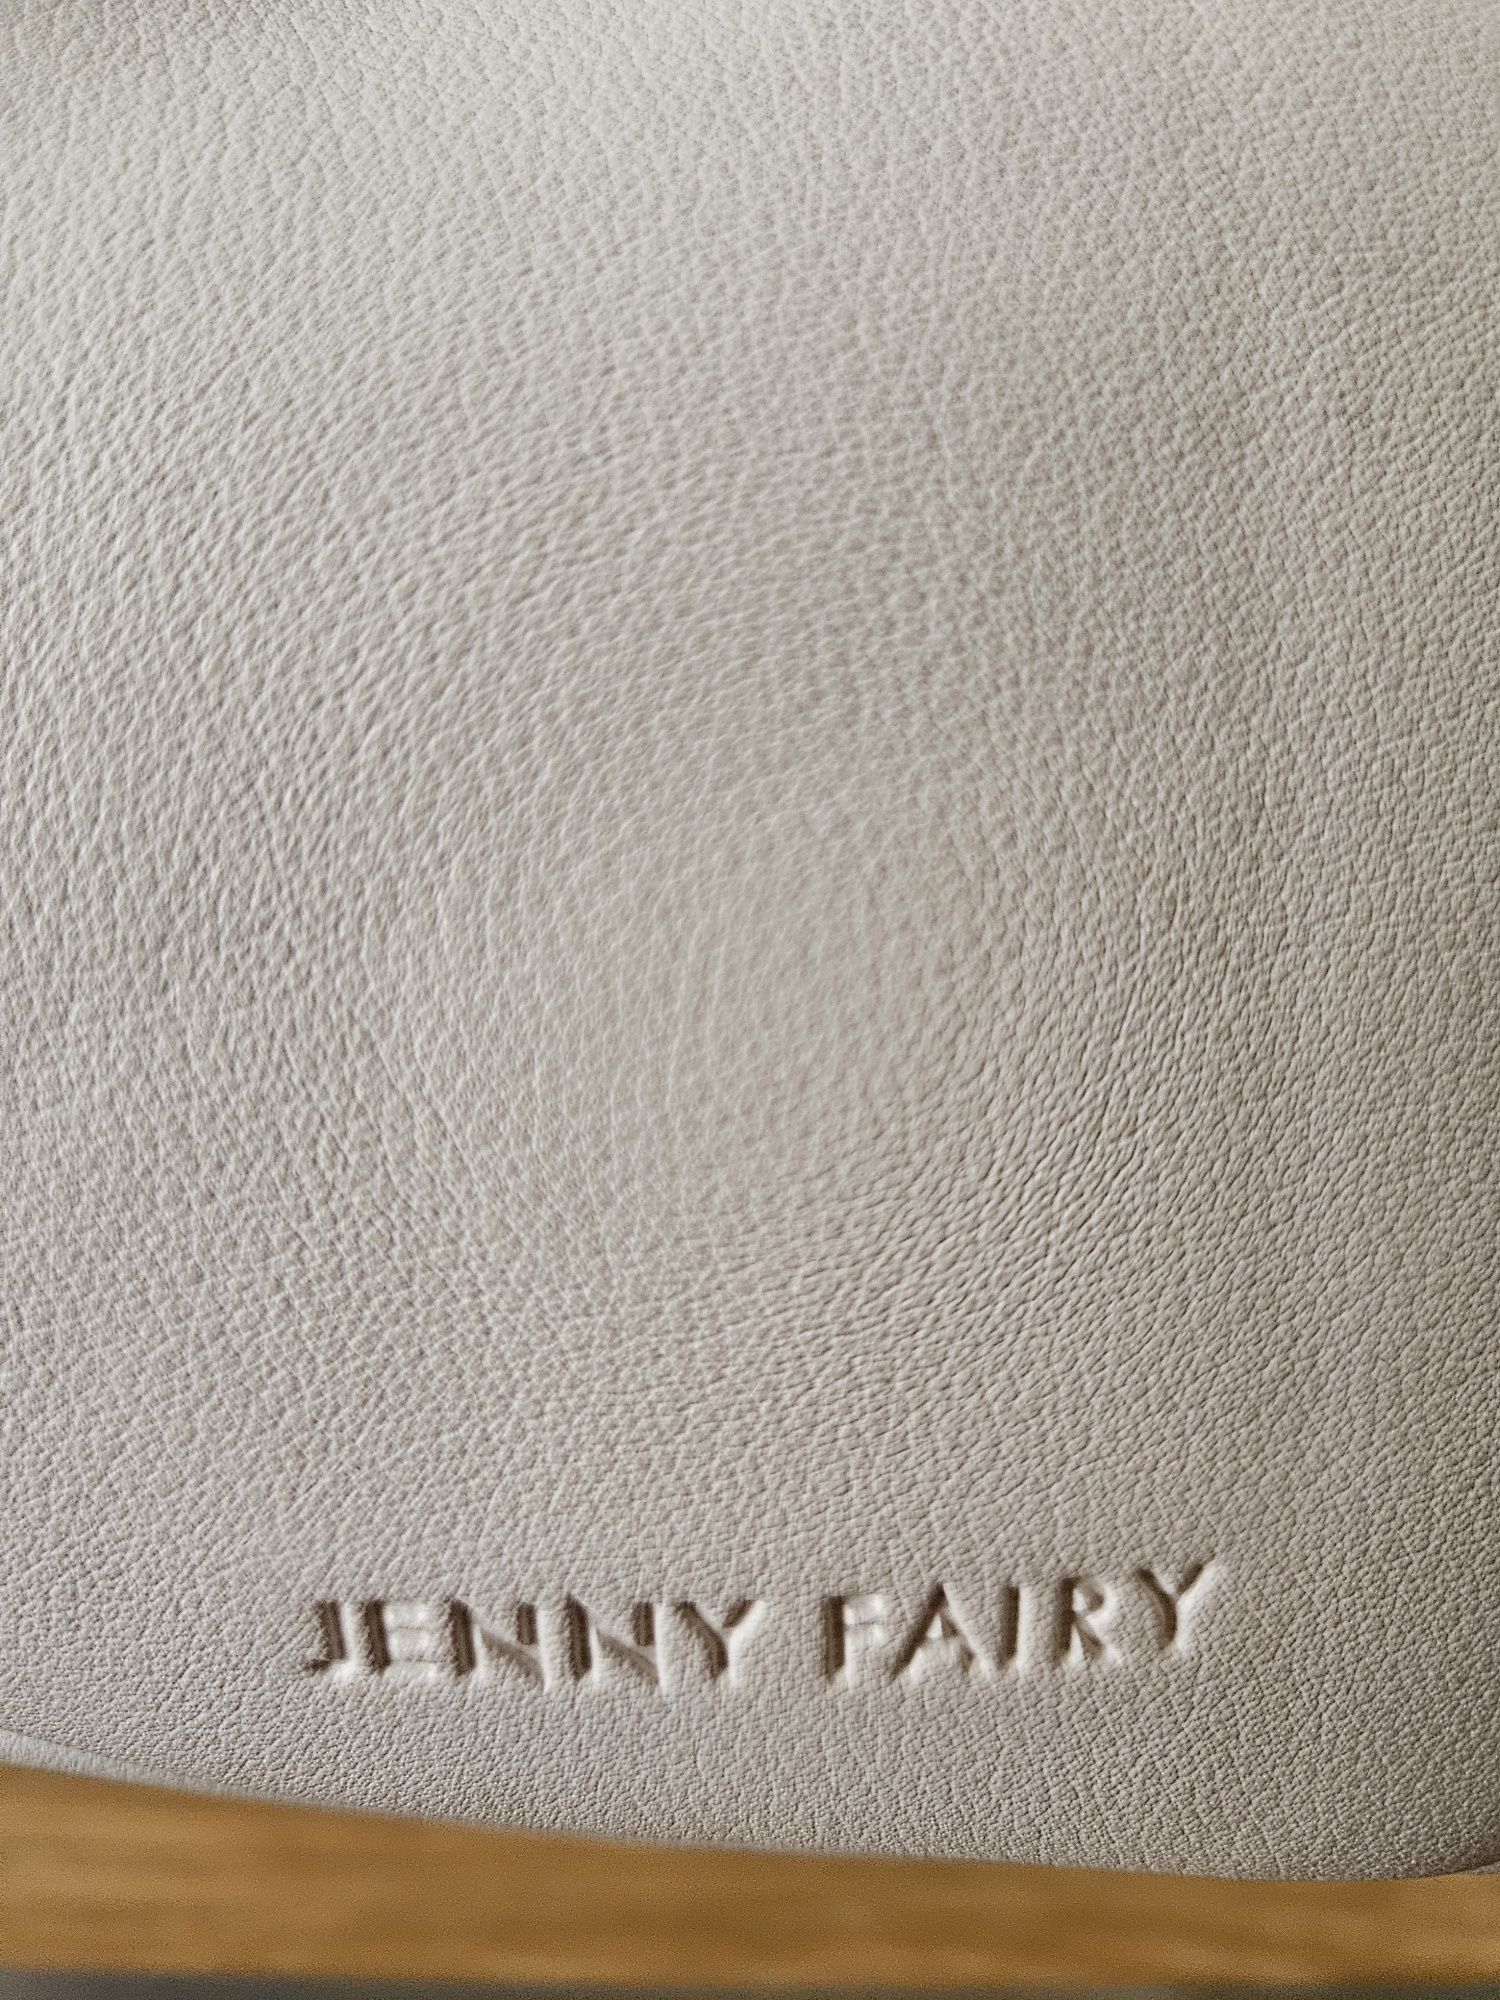 Plecak Jenny Fairy jak nowy